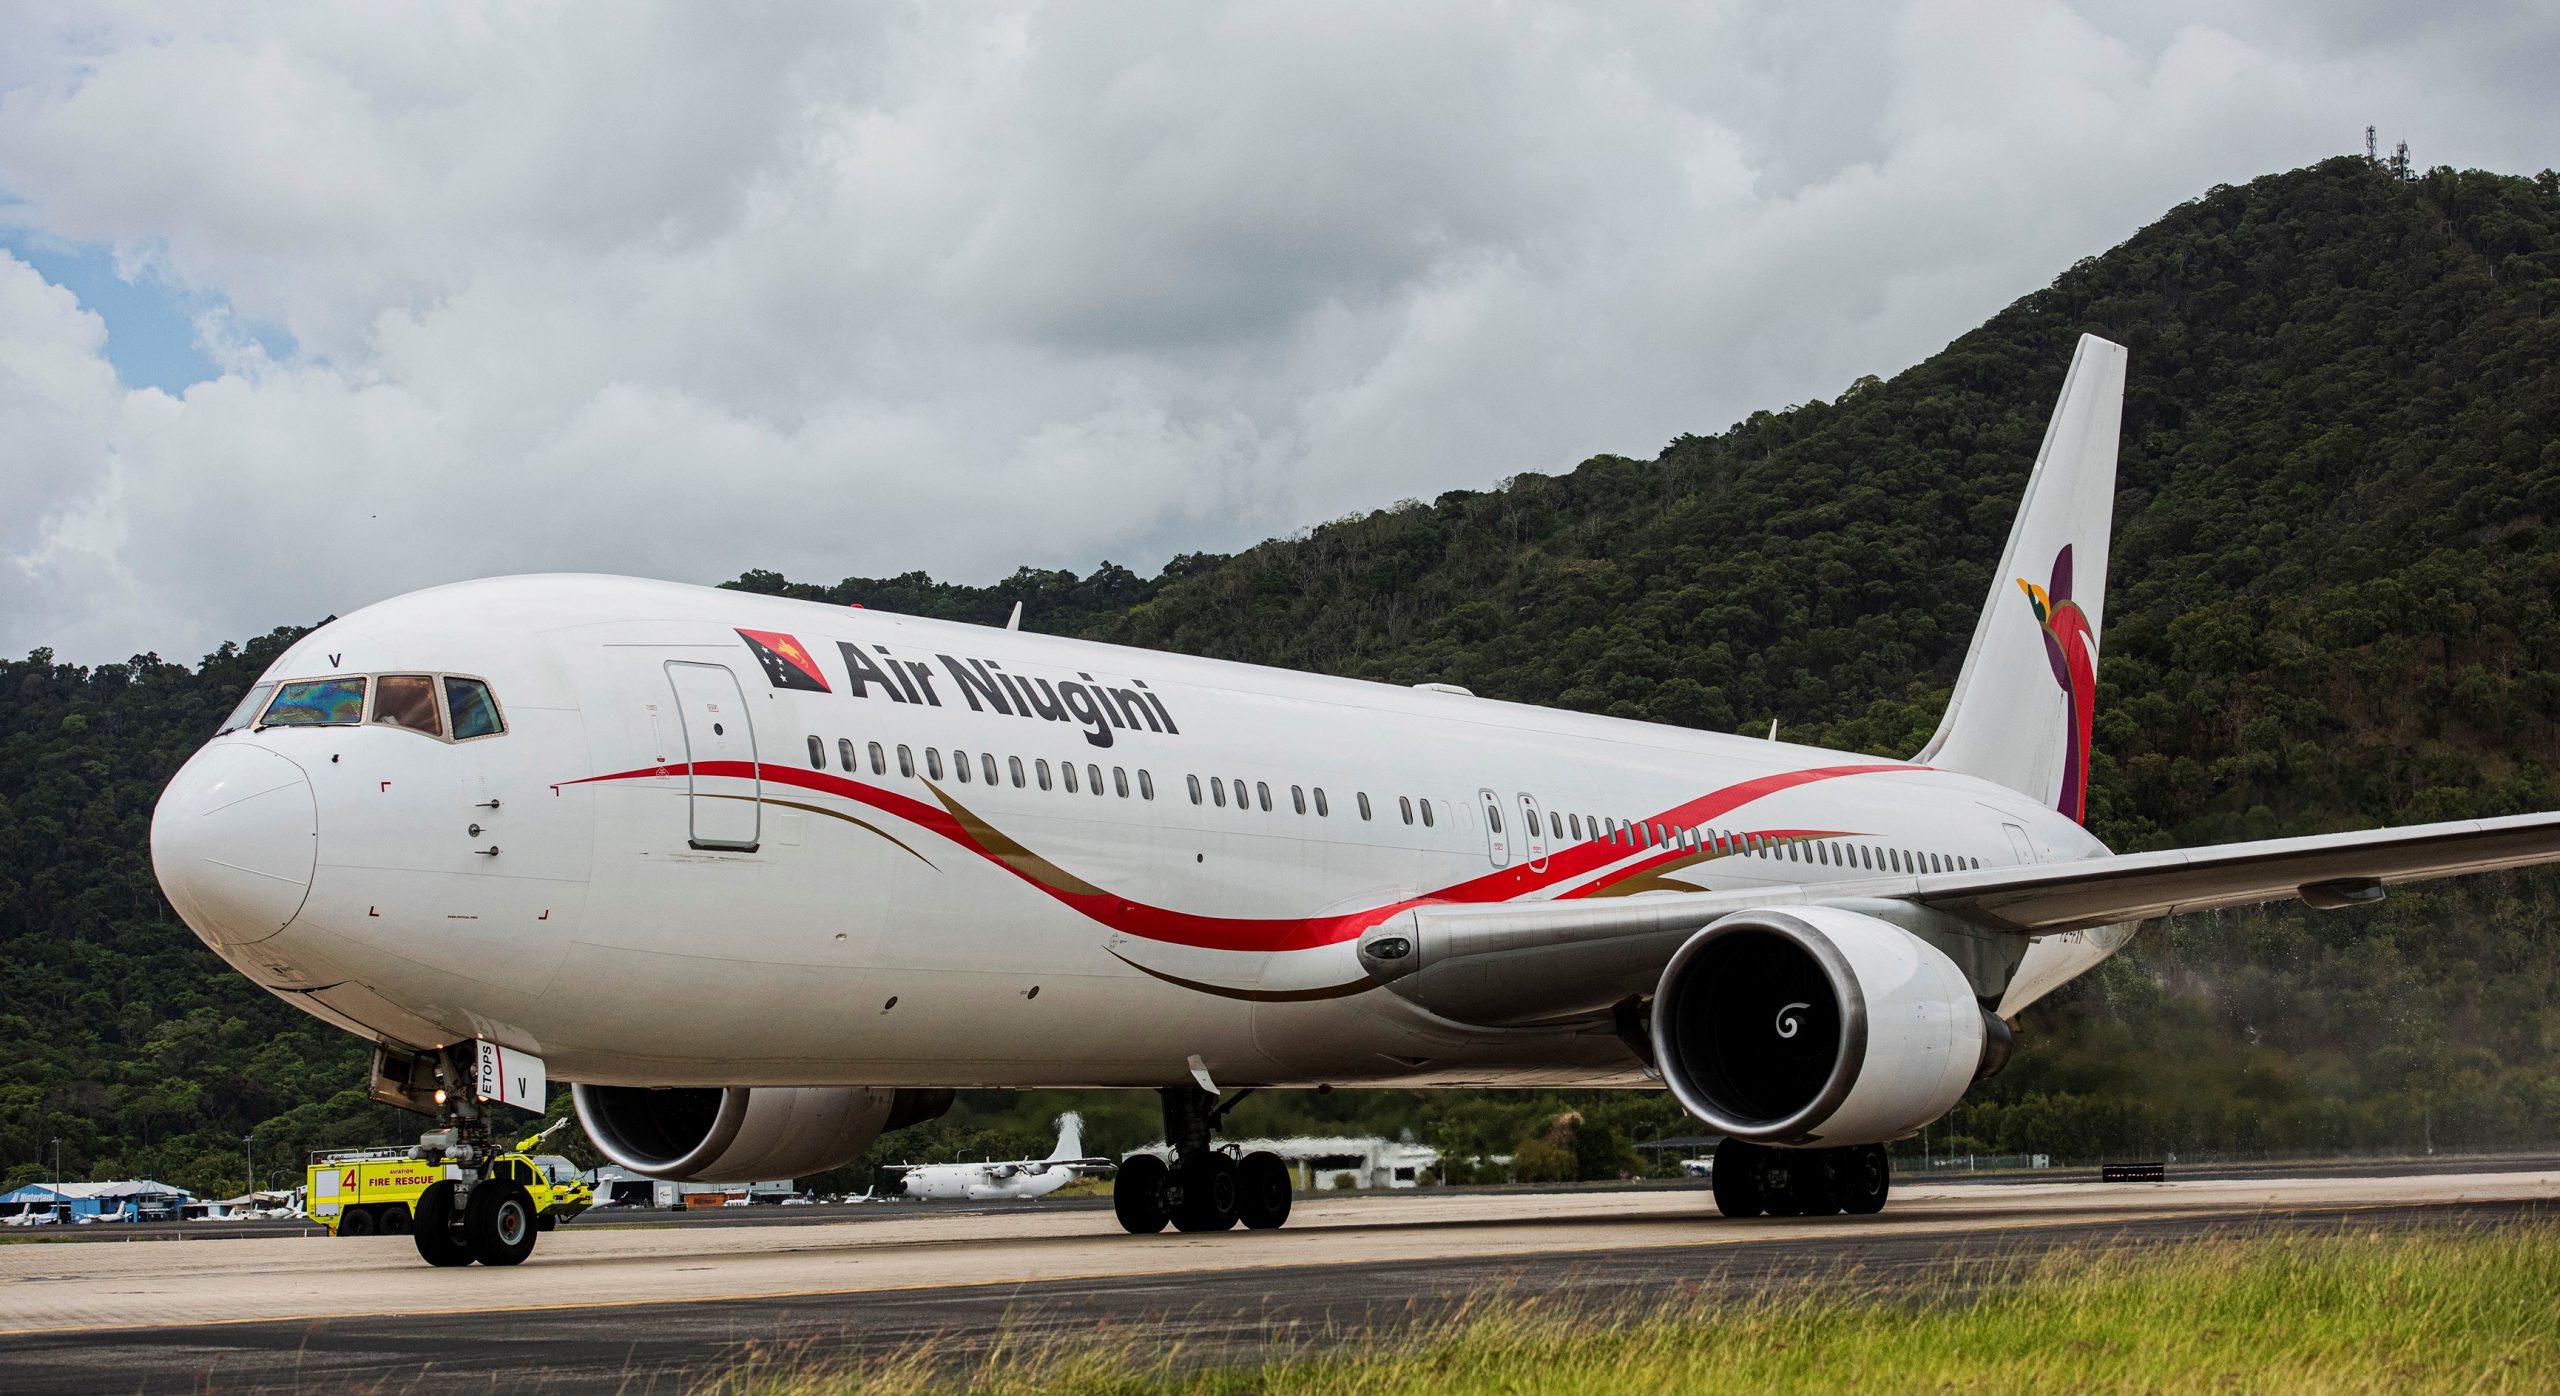 Air Niugini operates additional flights to Sydney.